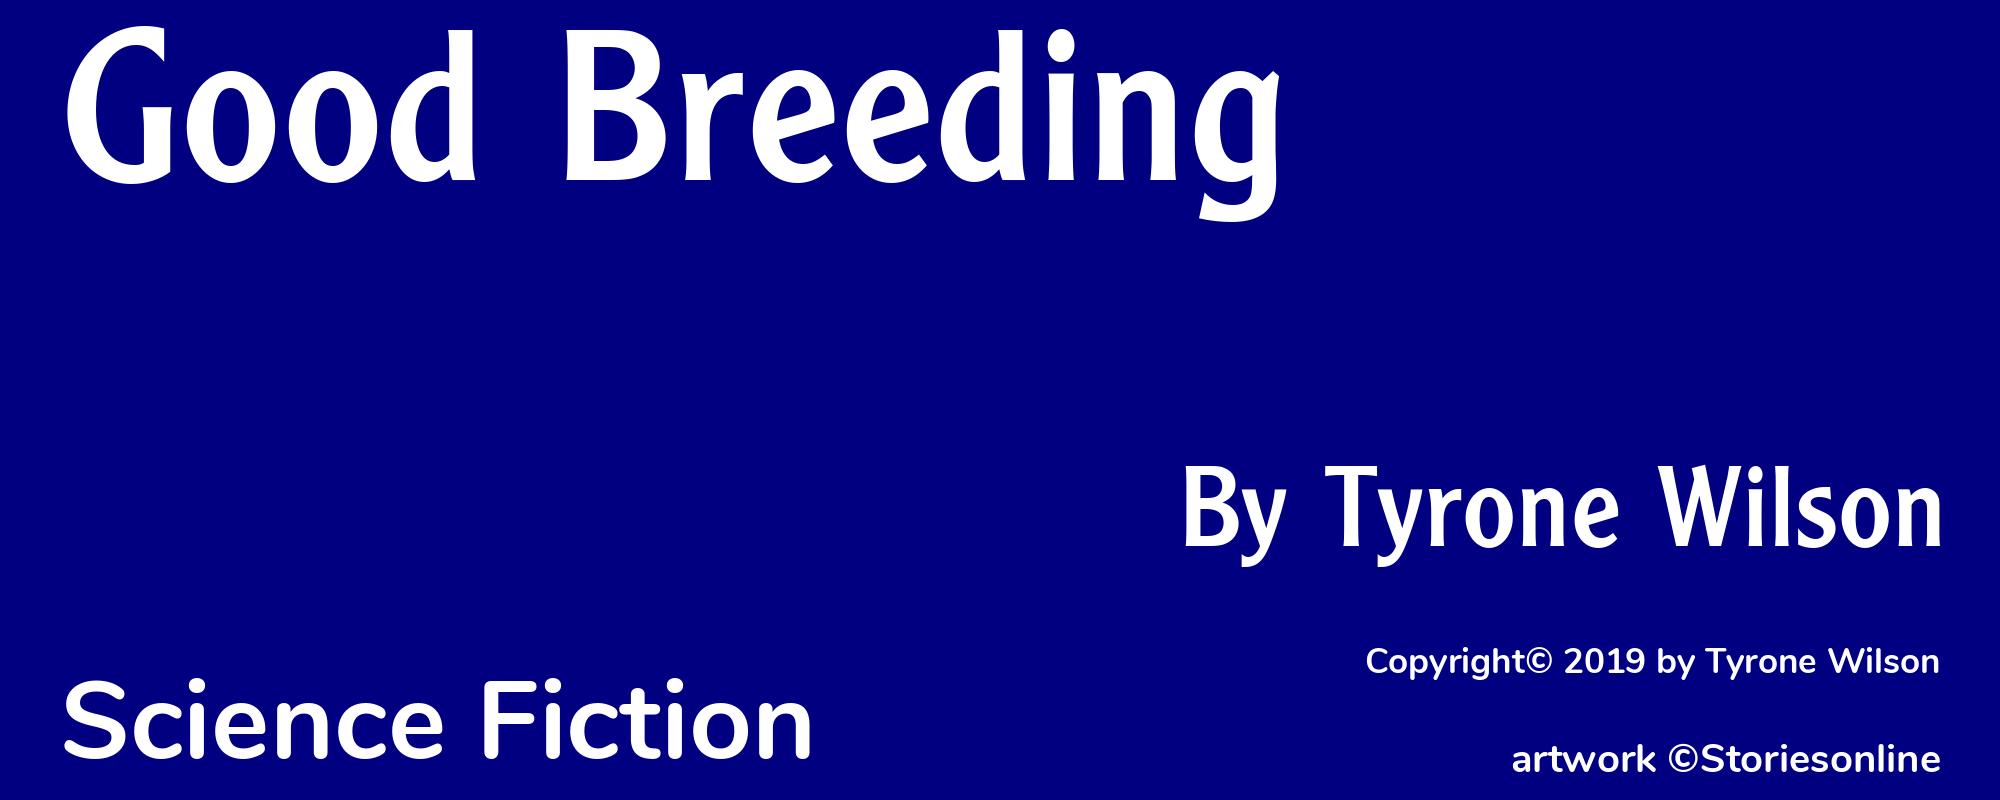 Good Breeding - Cover